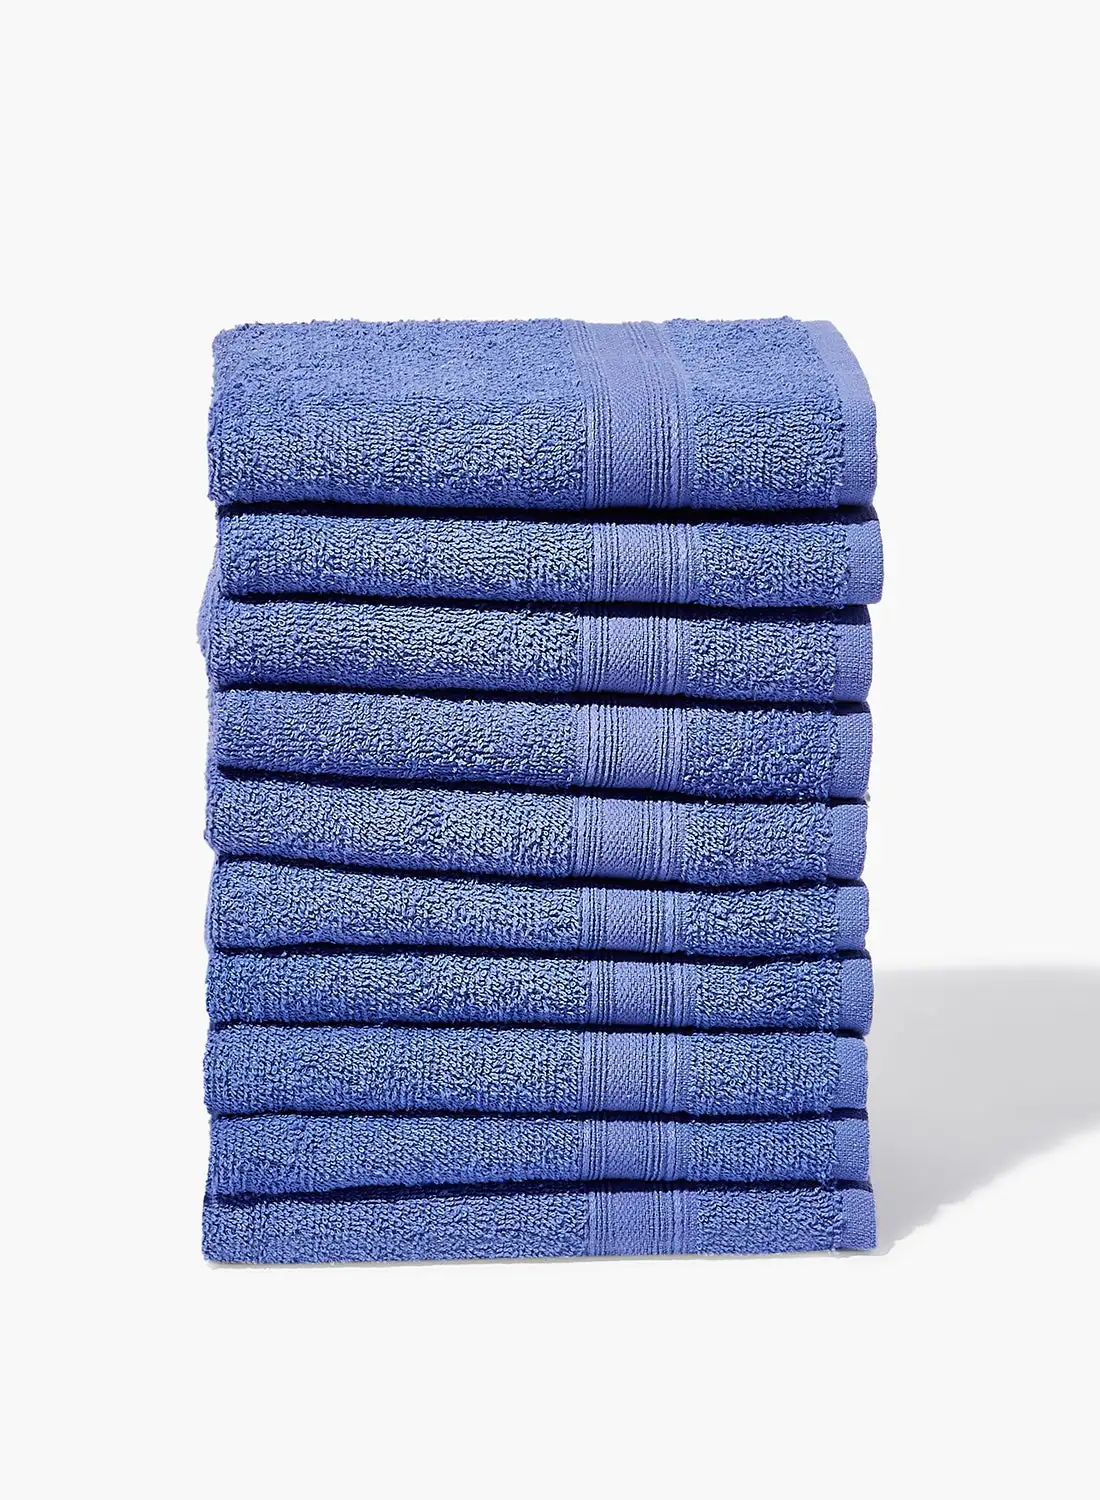 Amal 10 Piece Bathroom Towel Set - 400 GSM 100% Cotton Terry - 10 Face Towel - Periwinkle Color -Quick Dry - Super Absorbent